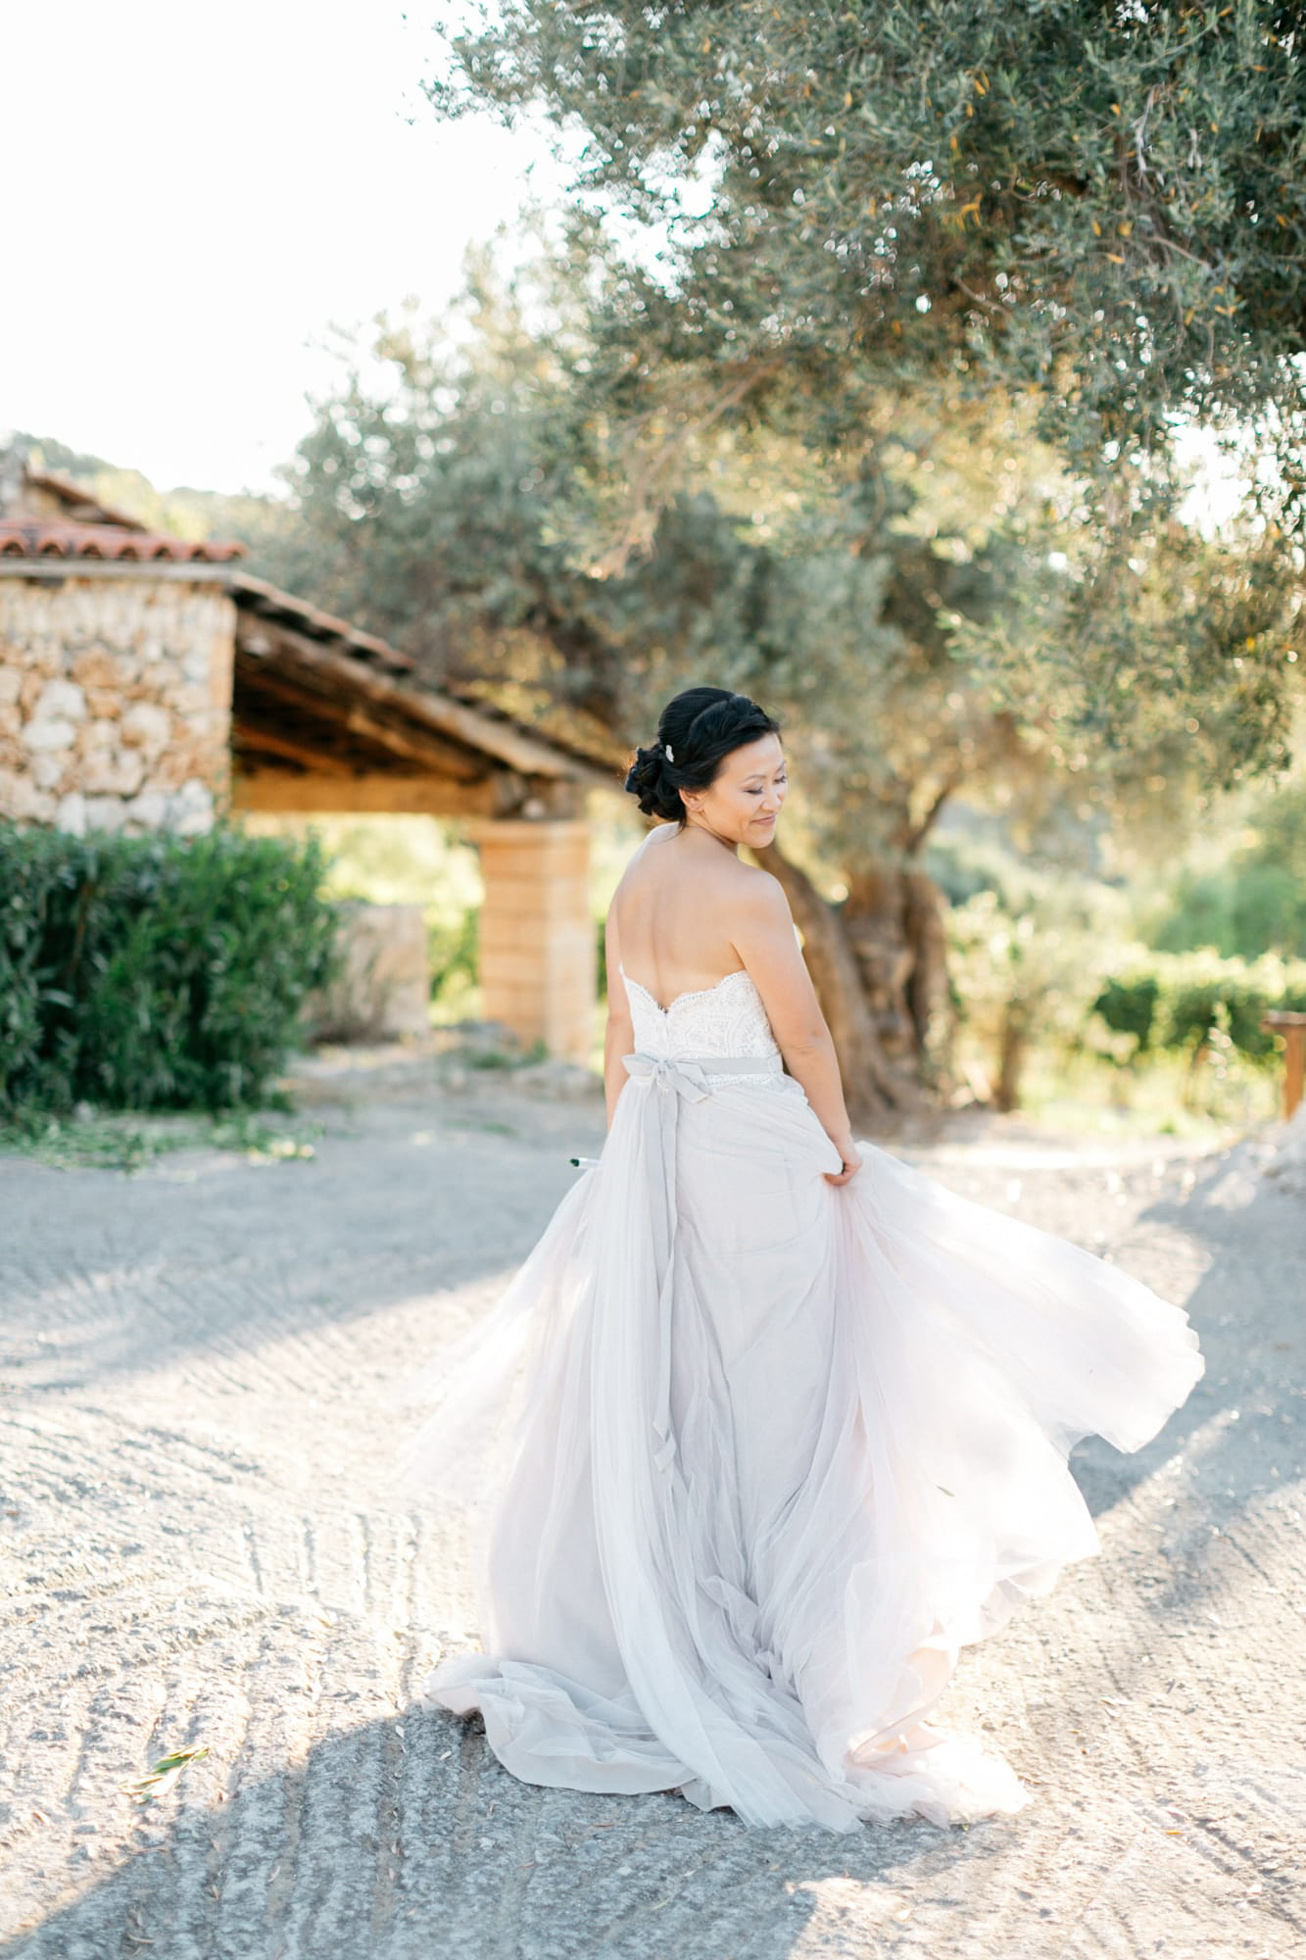 Elegant bride at her destination wedding in Agreco Farms, Grecotel, Crete, Greece